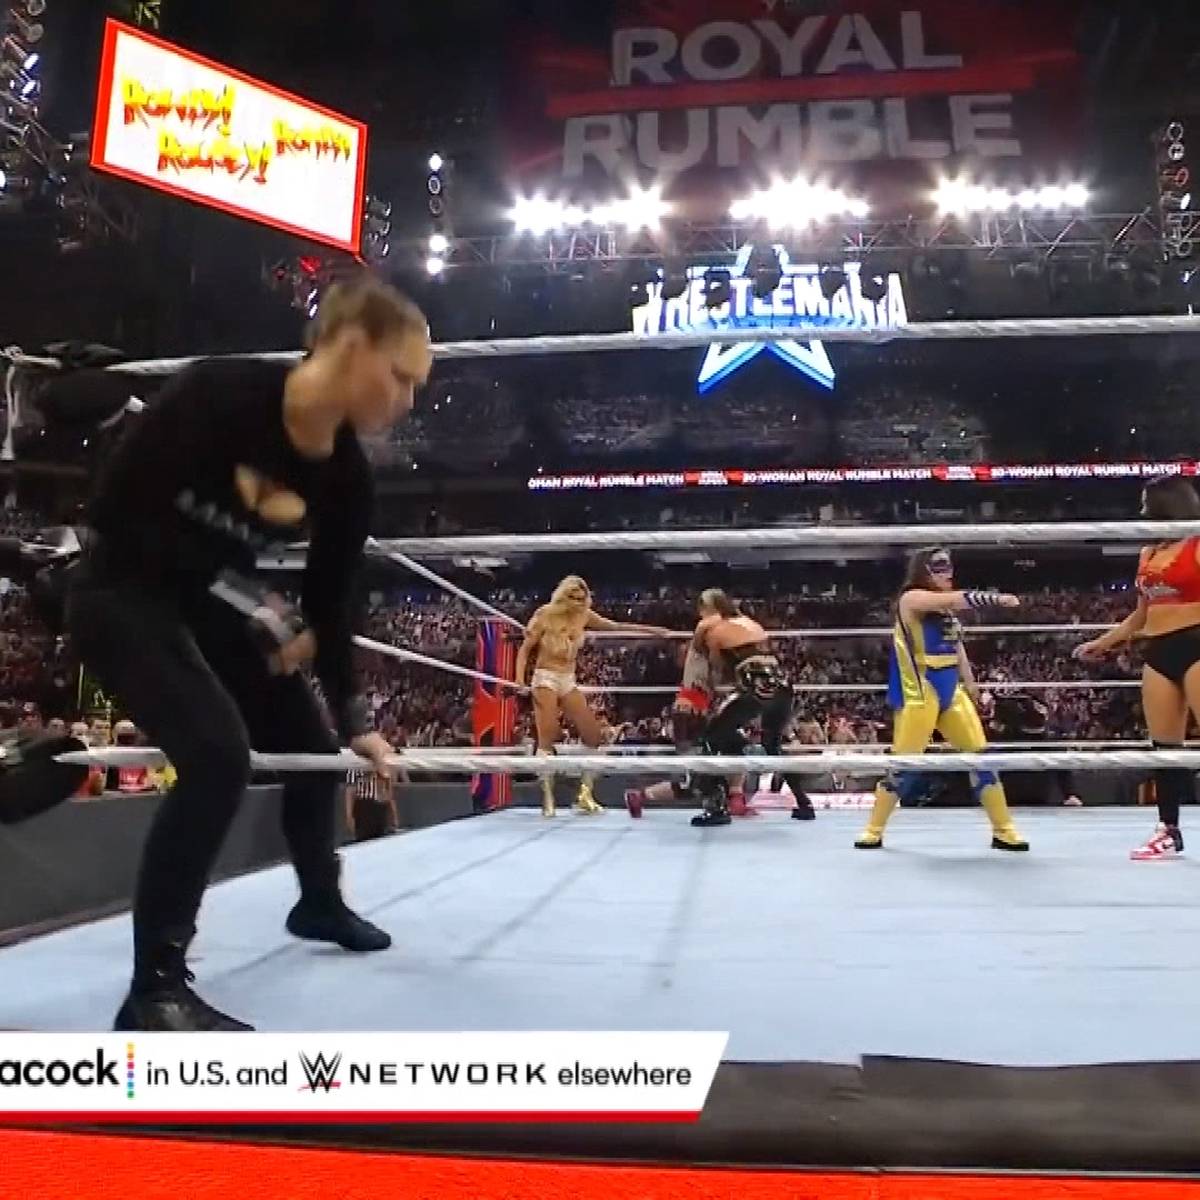 Hier feiert Ronda Rousey ihr Mega-Comeback bei WWE